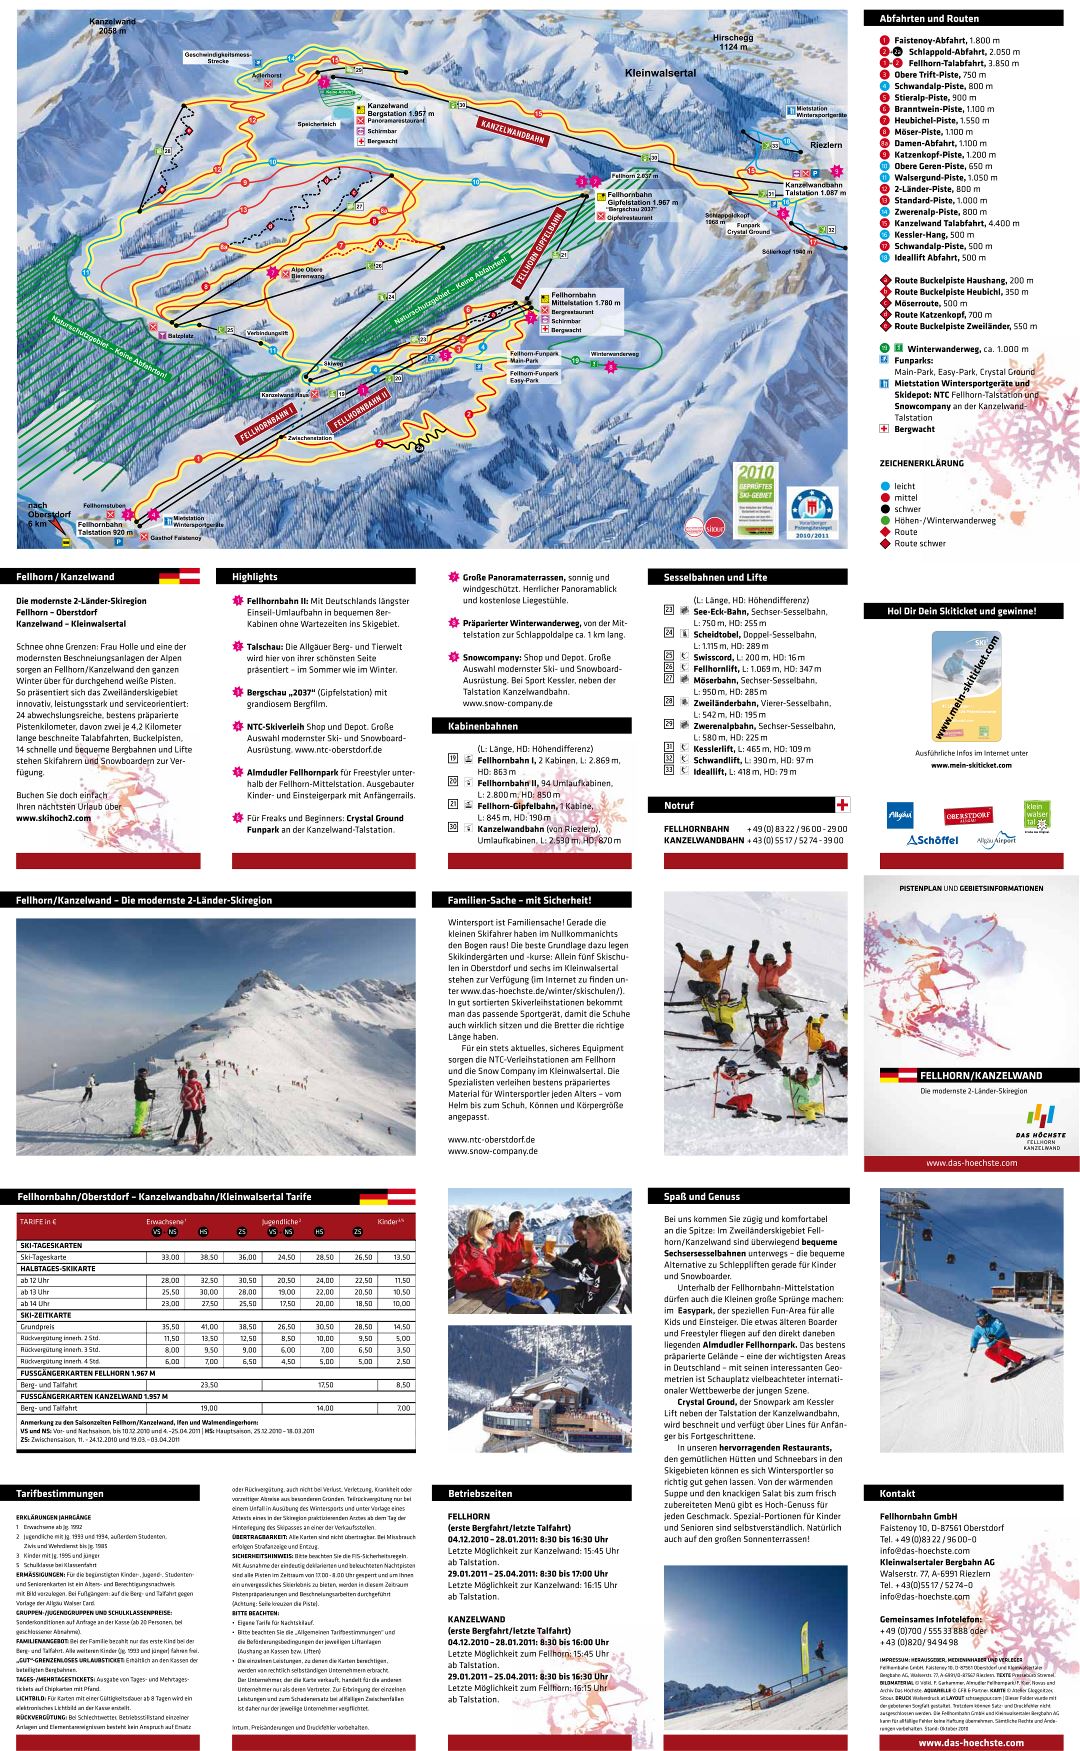 Large scale piste map and guide of Kanzelwand, Fellhorn, Kleinwalsertal - Oberstdorf Ski Resort - 2010